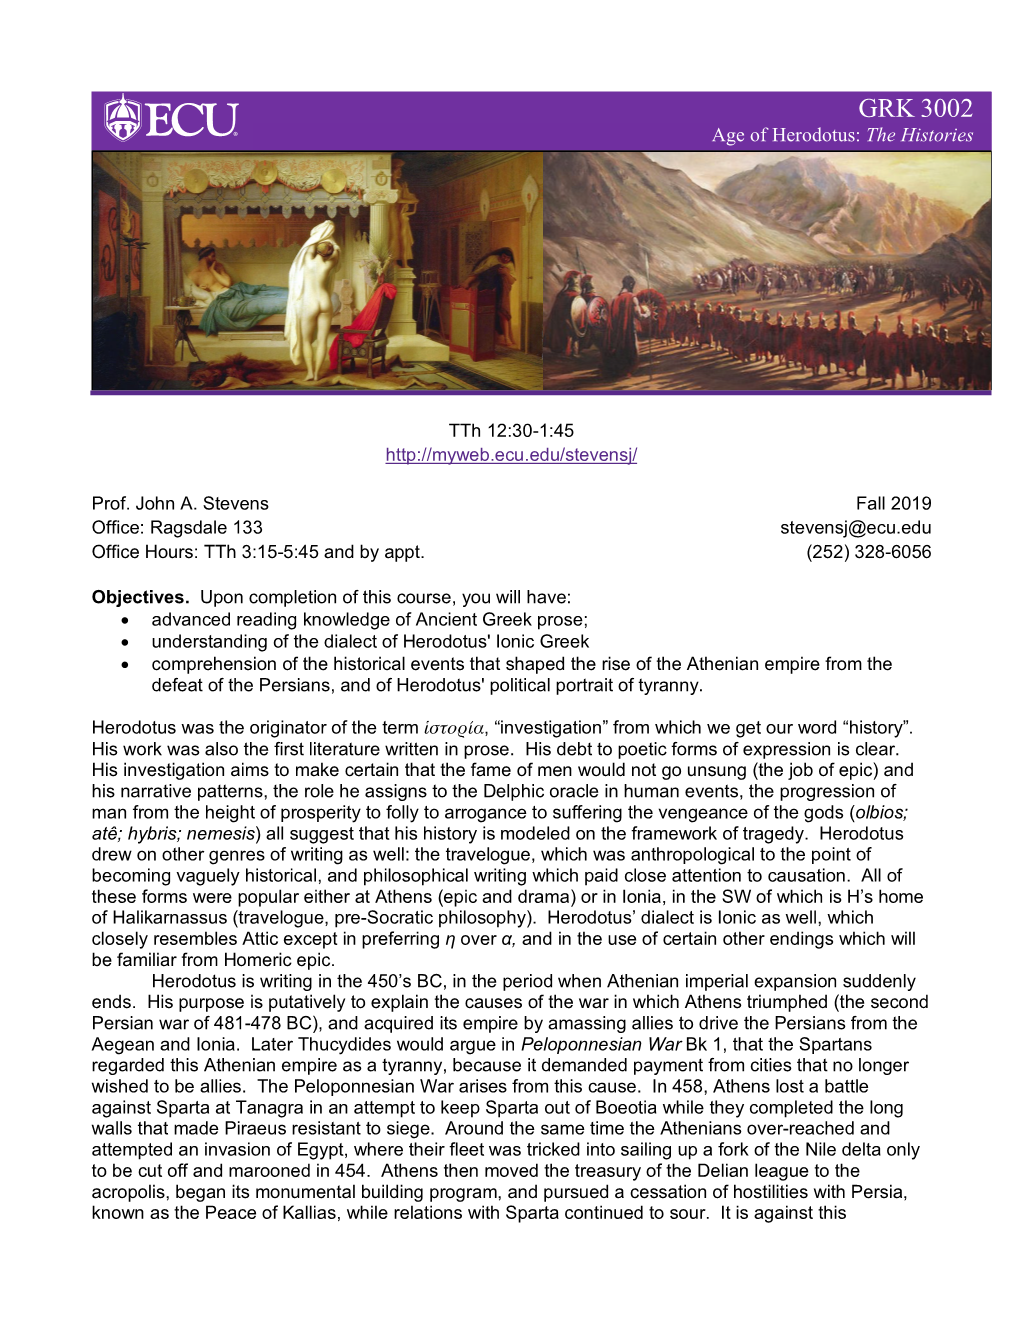 GRK 3002 Age of Herodotus: the Histories